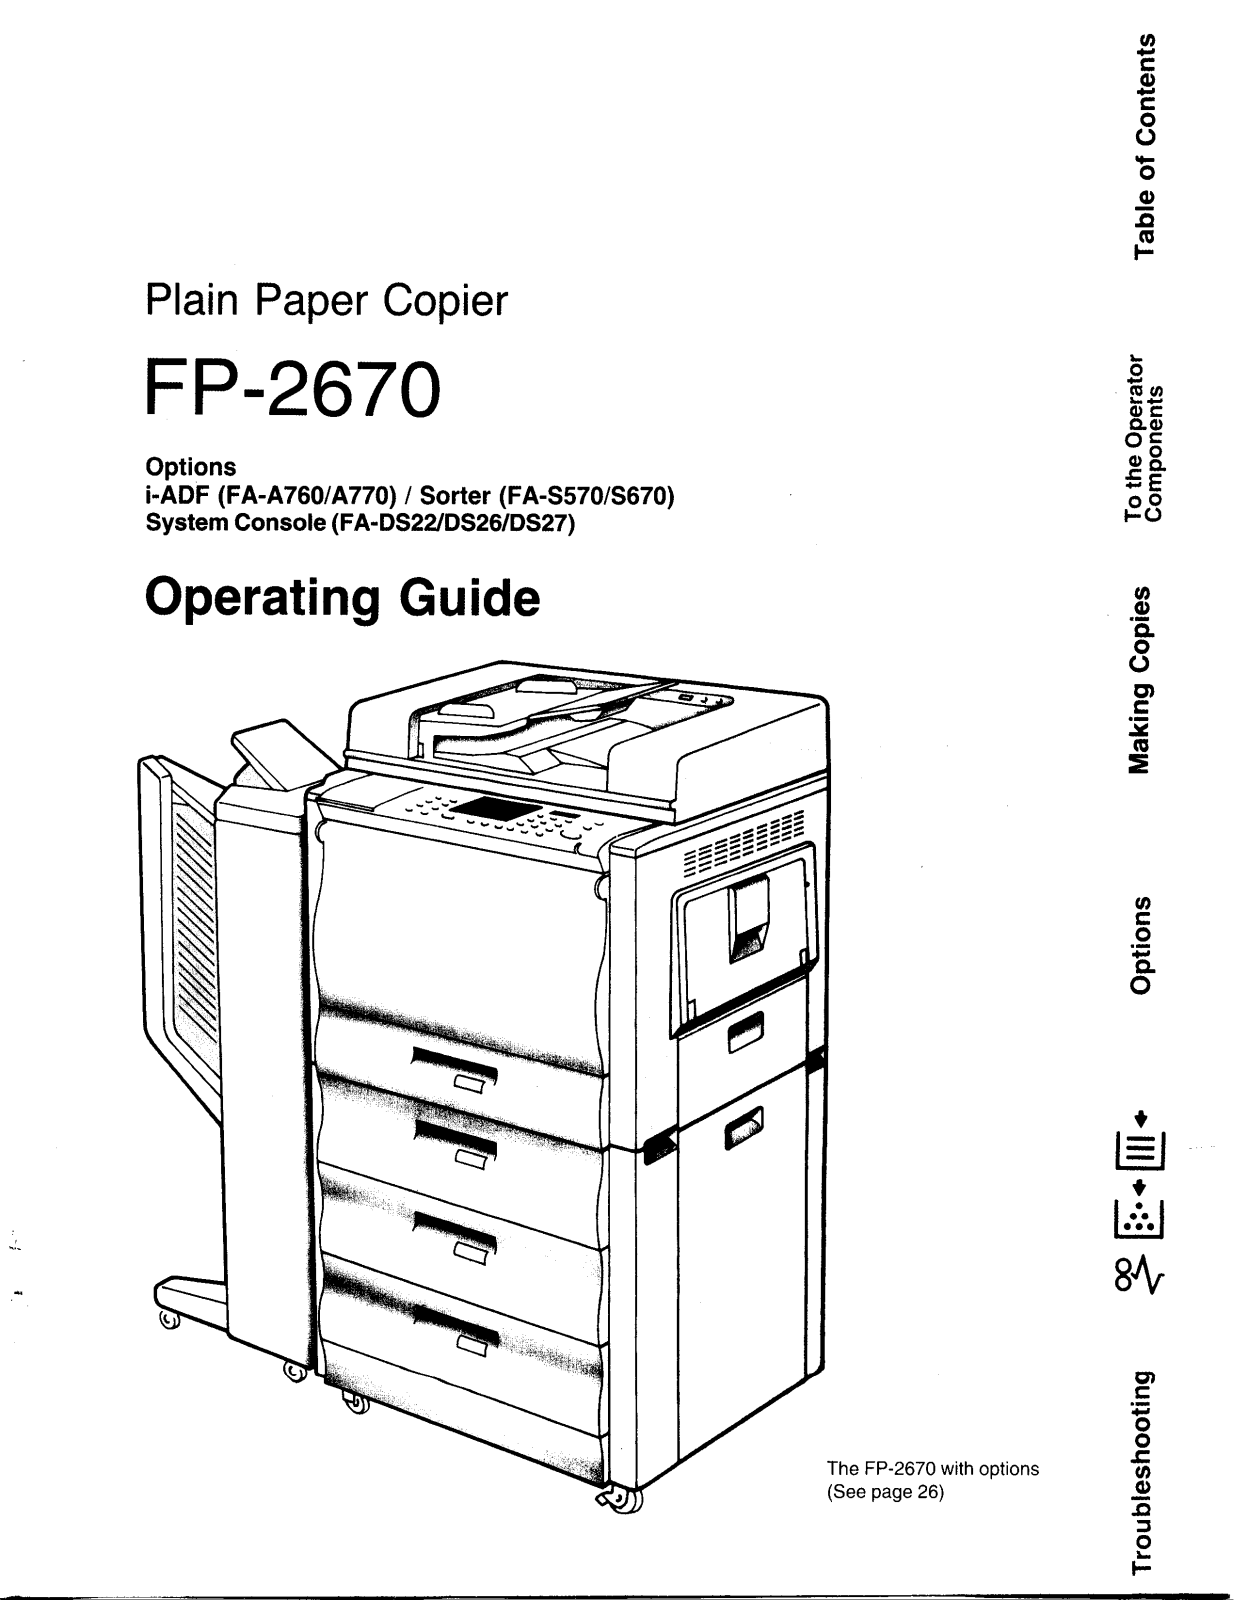 Panasonic fp-2670 Operation Manual